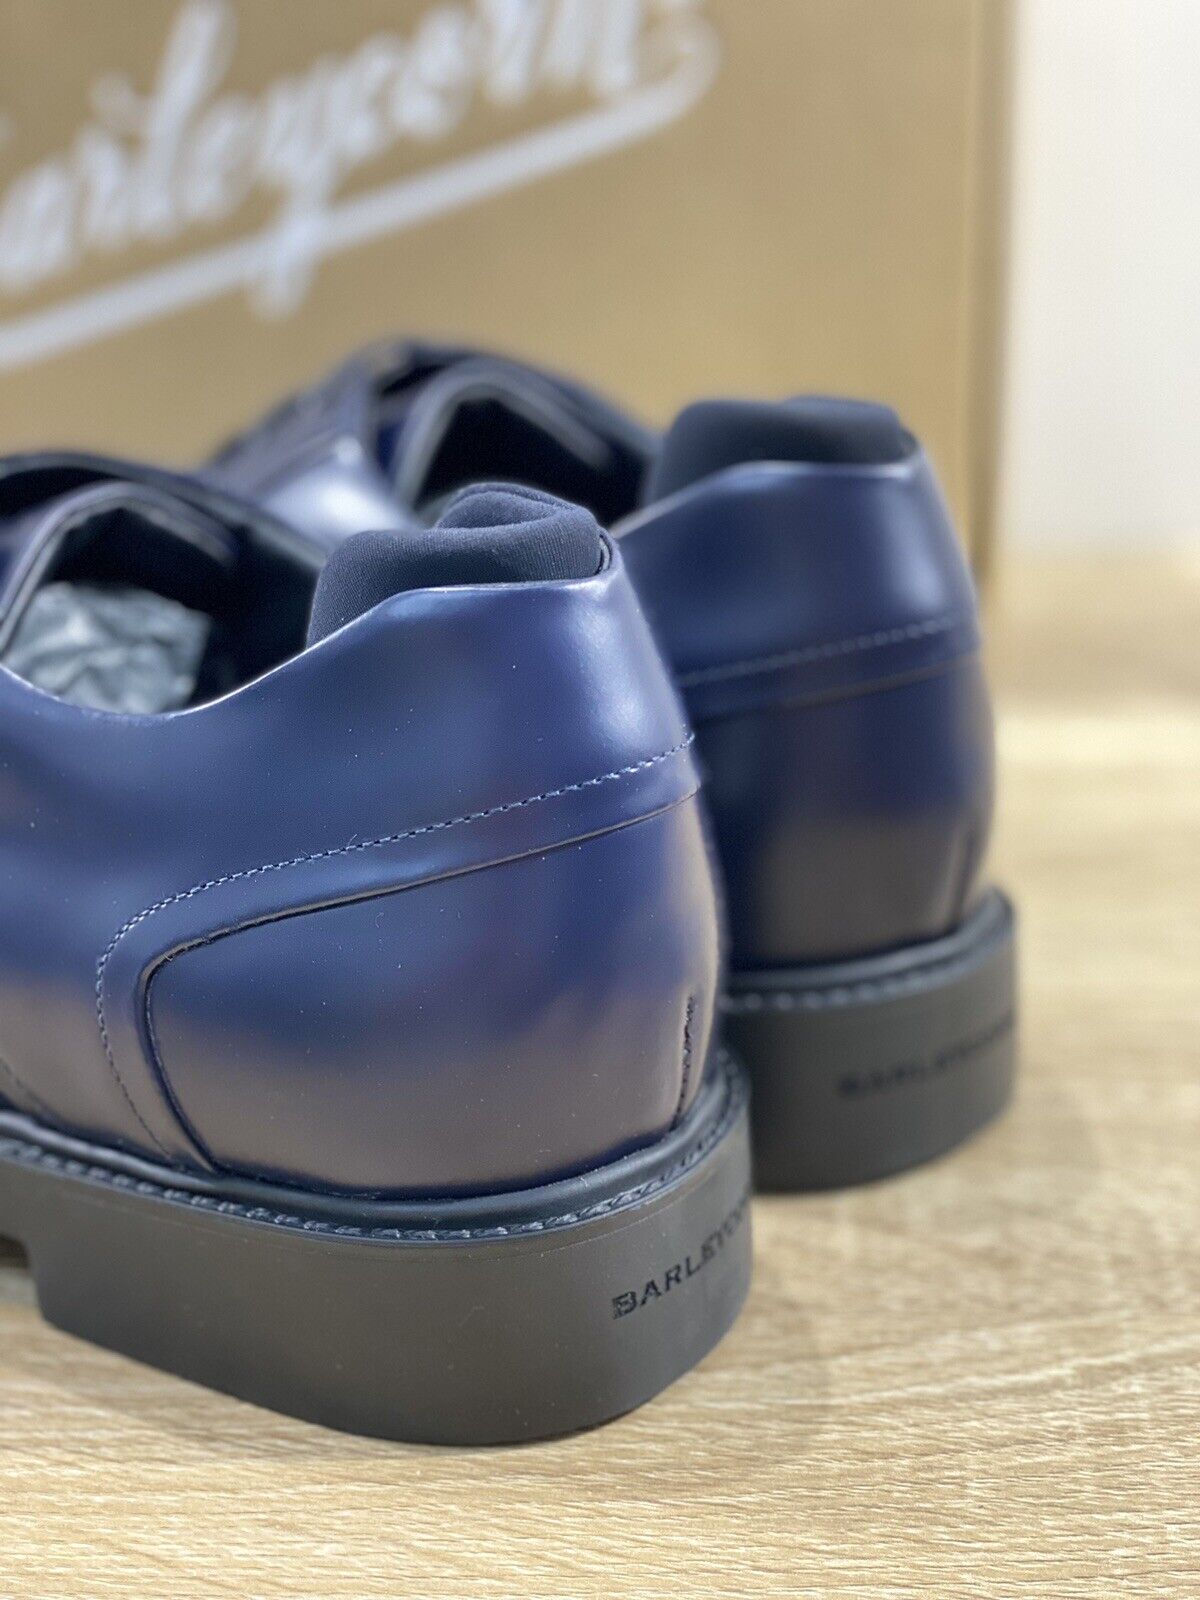 Barleycorn Scarpa Uomo Derby Sleek Pelle Blu Extralight Casual Men Shoes 42